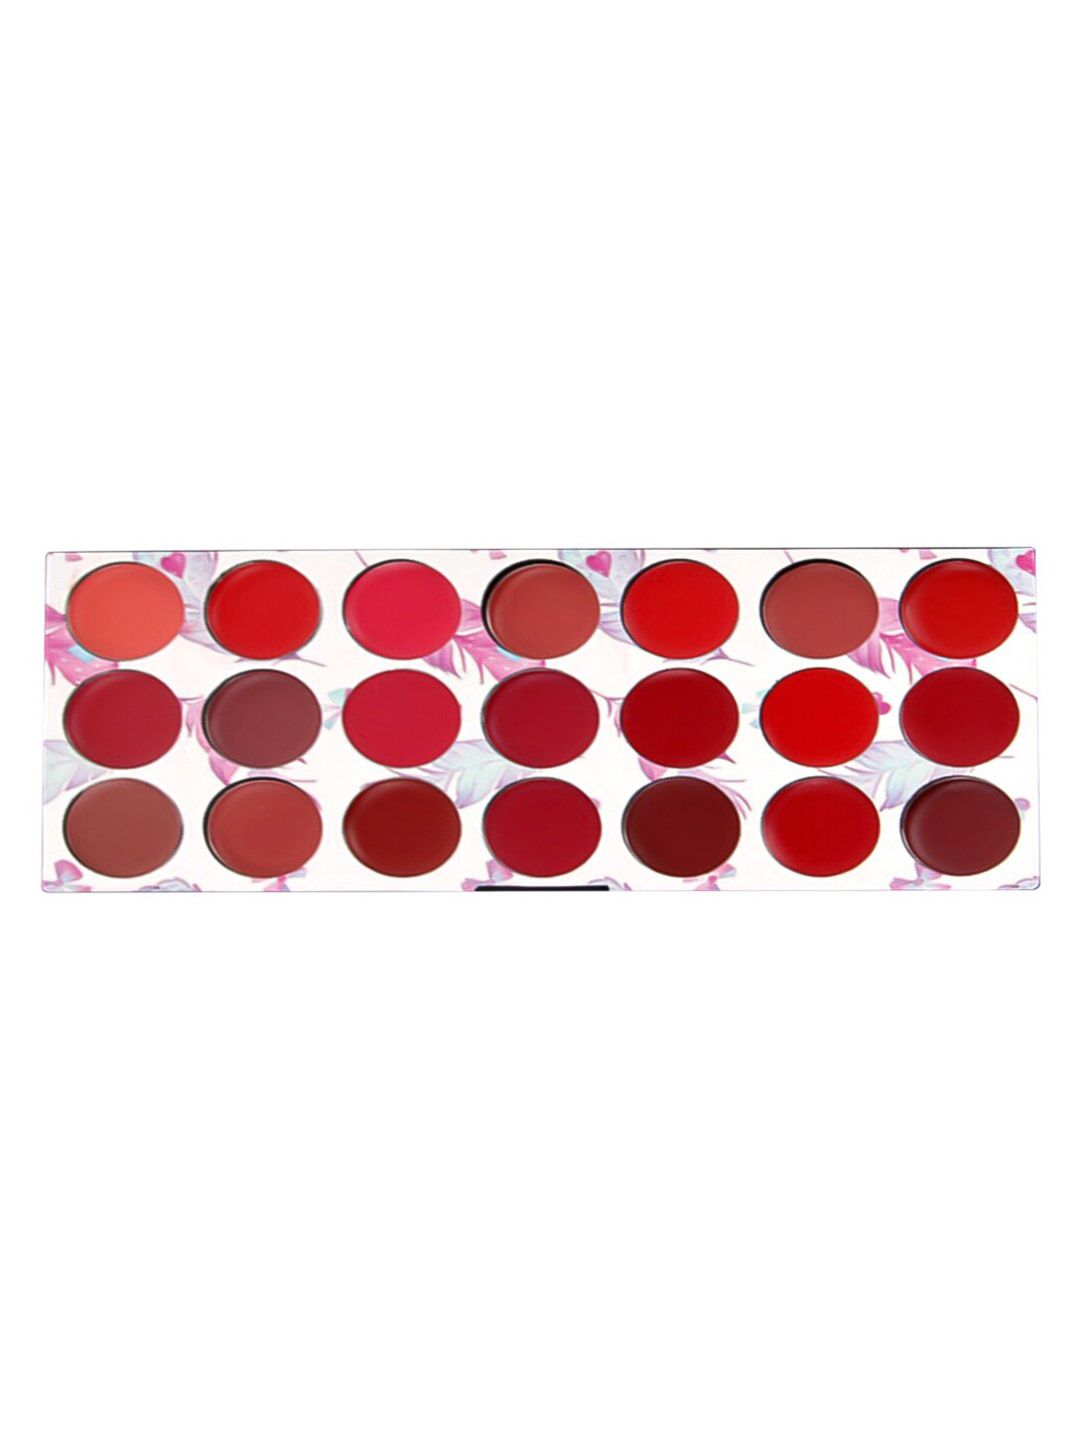 MISS ROSE 21 Color matte lip color palatte 7301-403B Price in India